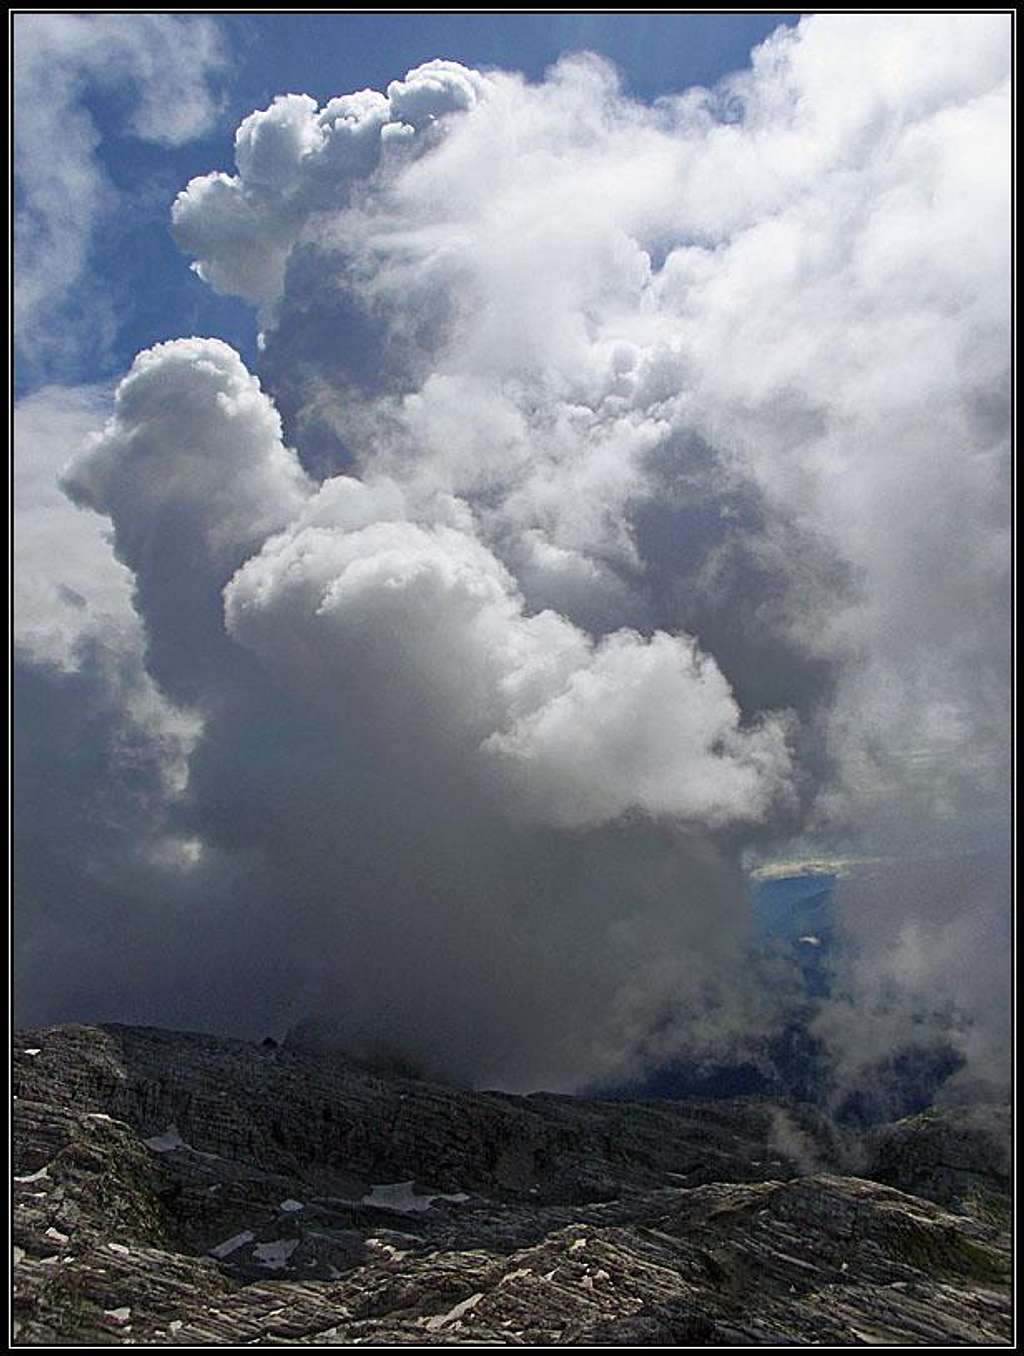 Clouds above Kanin/Canin plateau